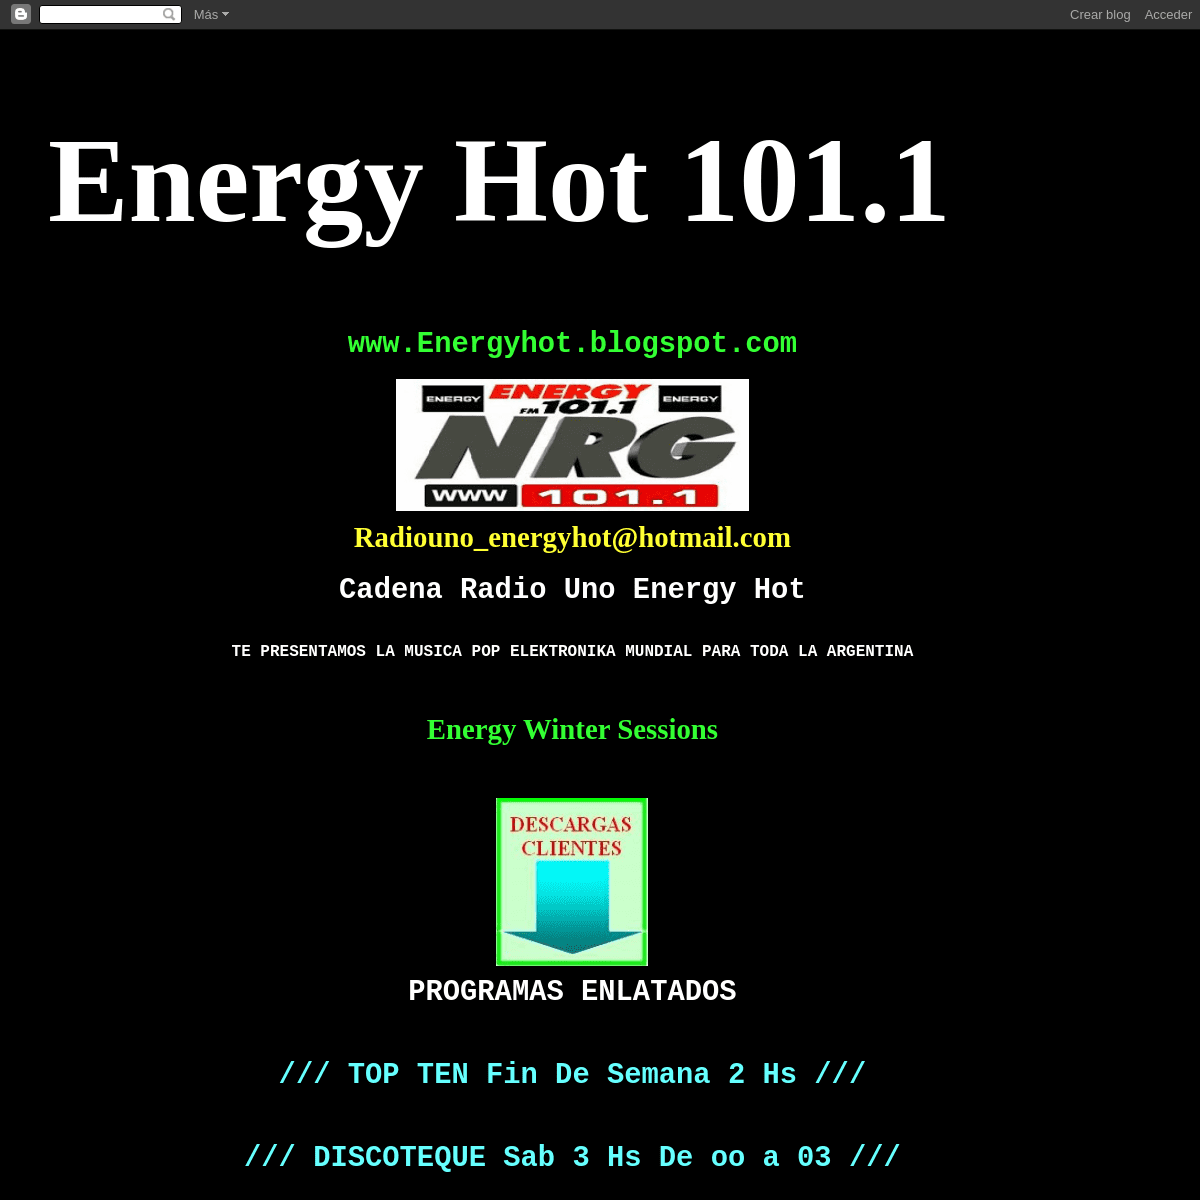 A complete backup of energyhot.blogspot.com